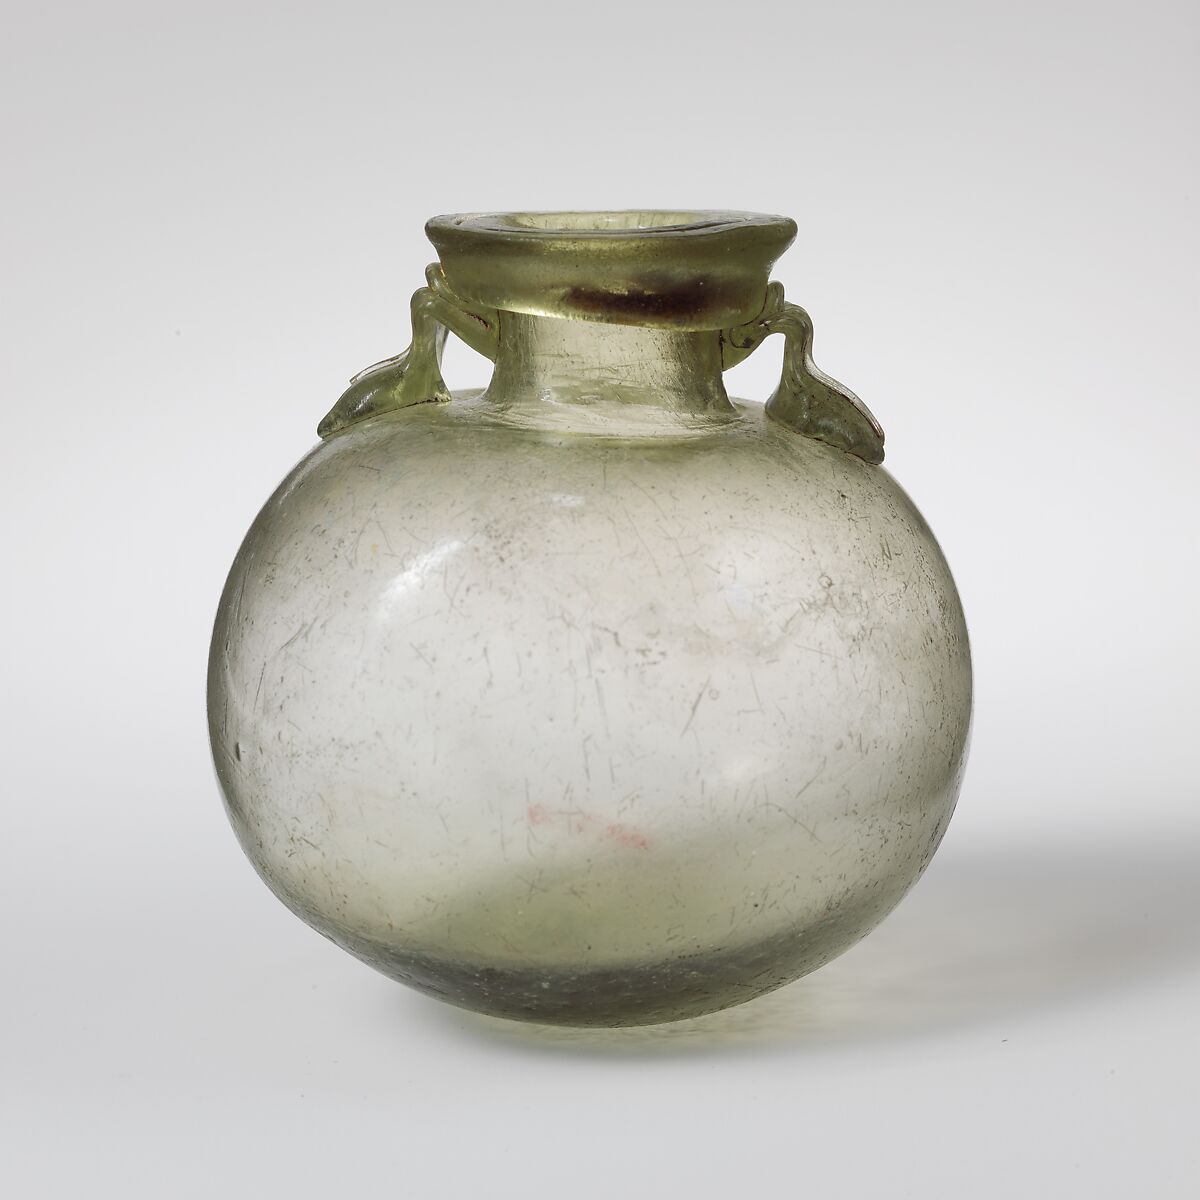 Glass aryballos (oil bottle), Glass, Roman, Eastern Mediterranean 